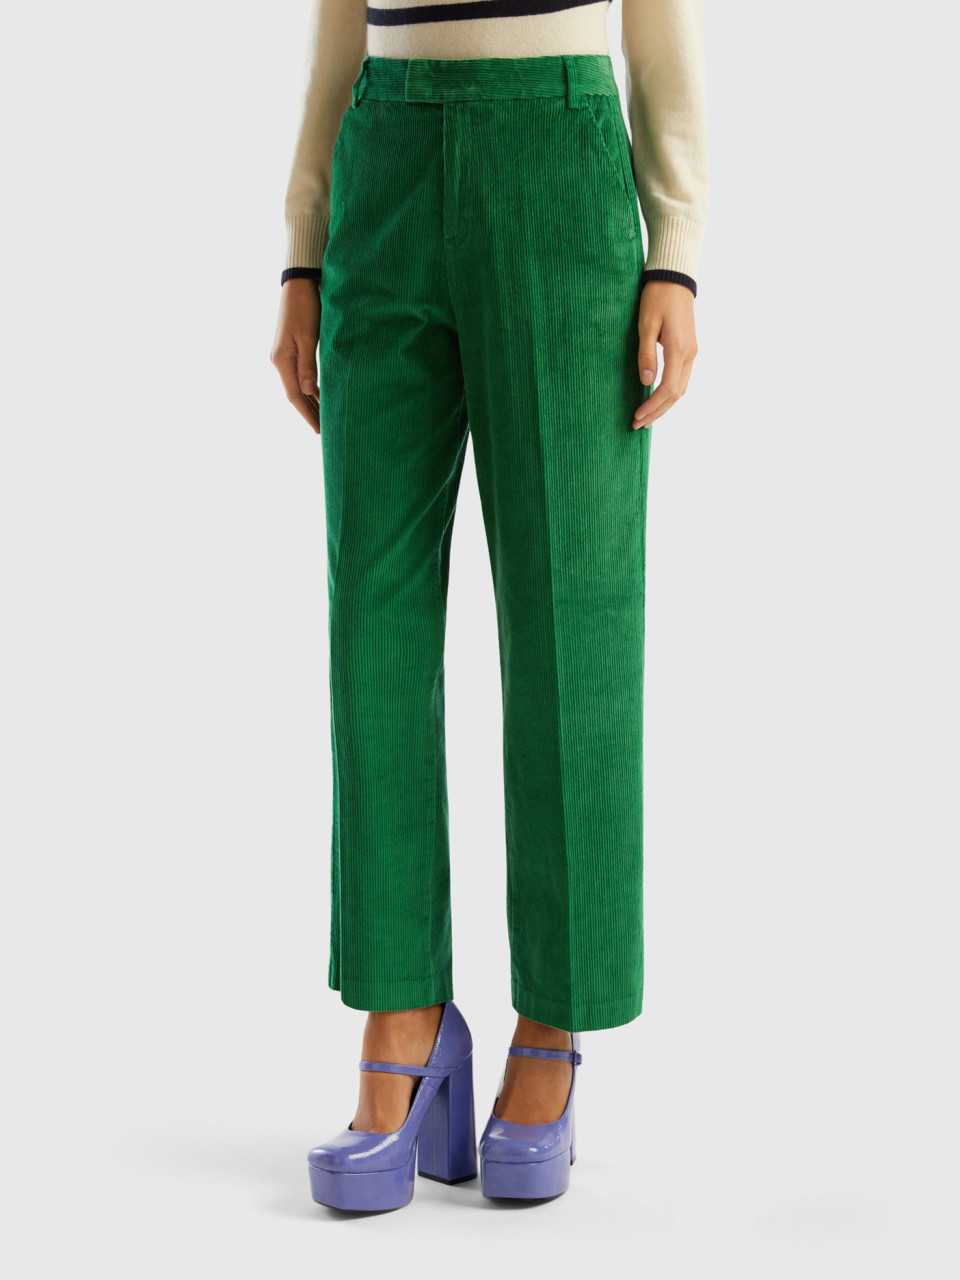 Benetton, Straight Corduroy Trousers, Green, Women